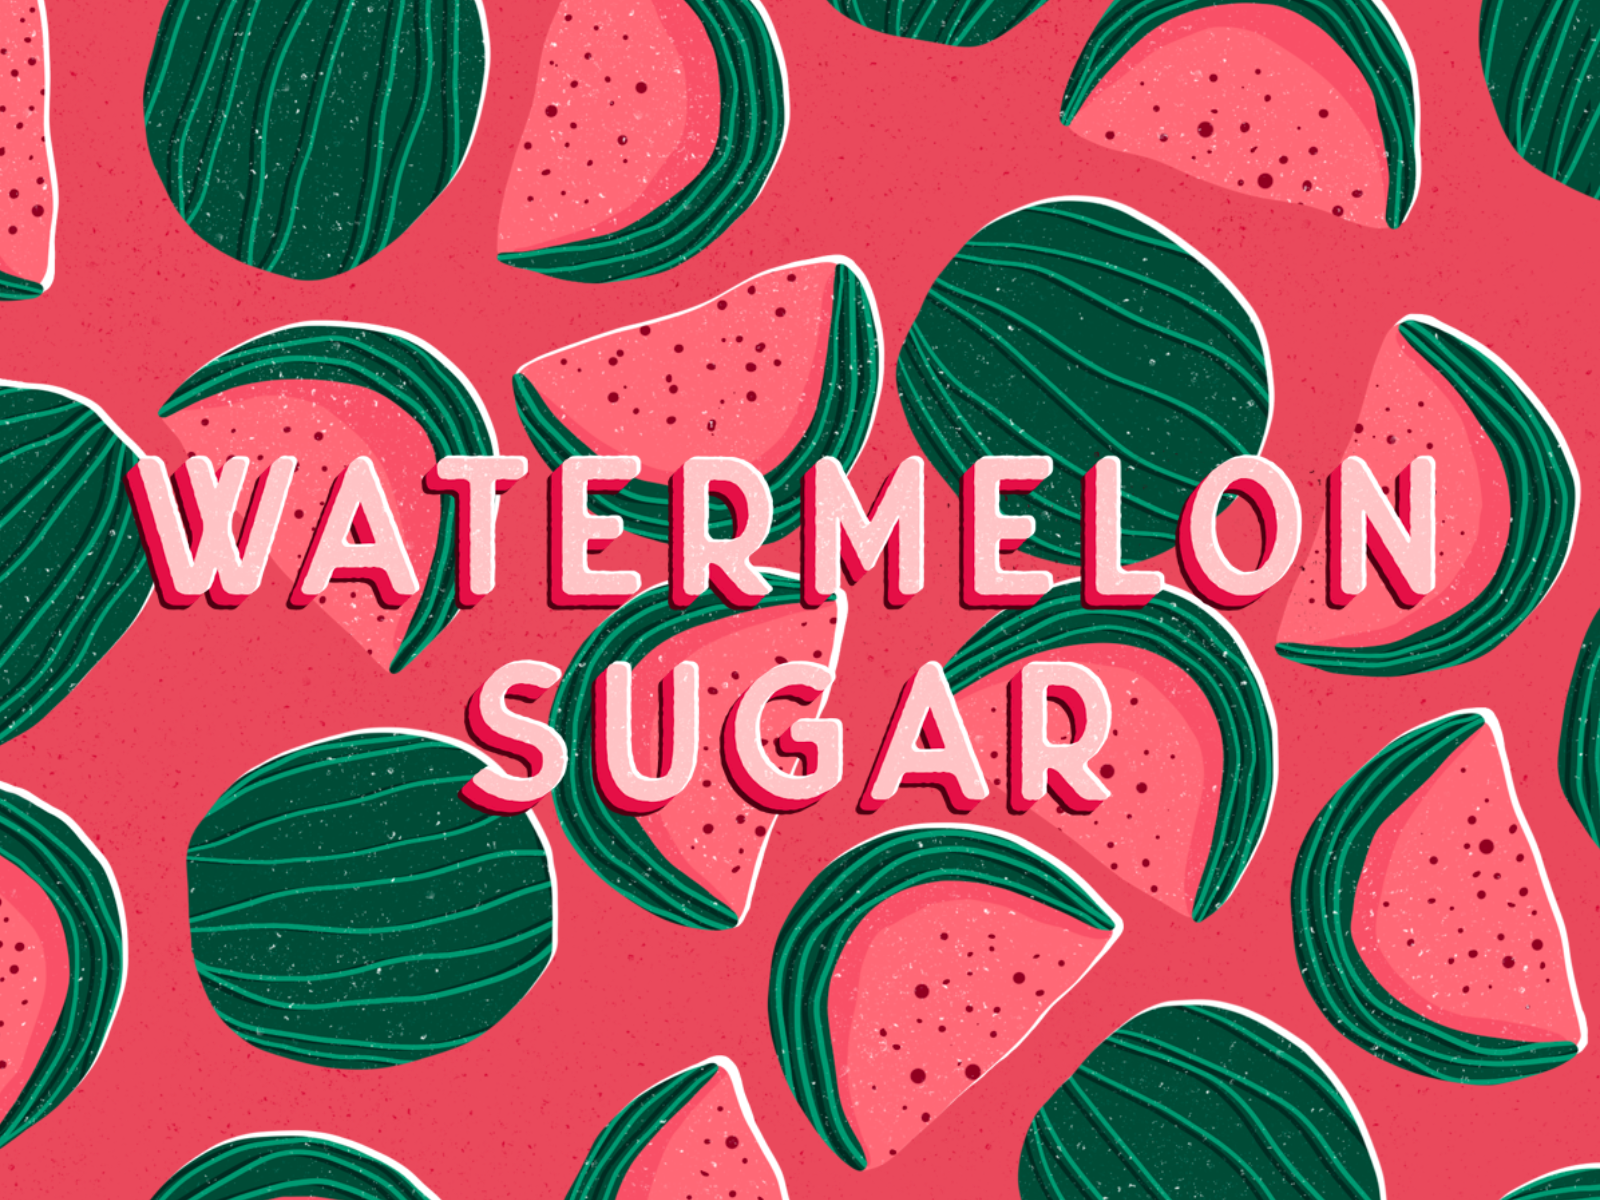 Watermelon sugar meaning urban dictionary